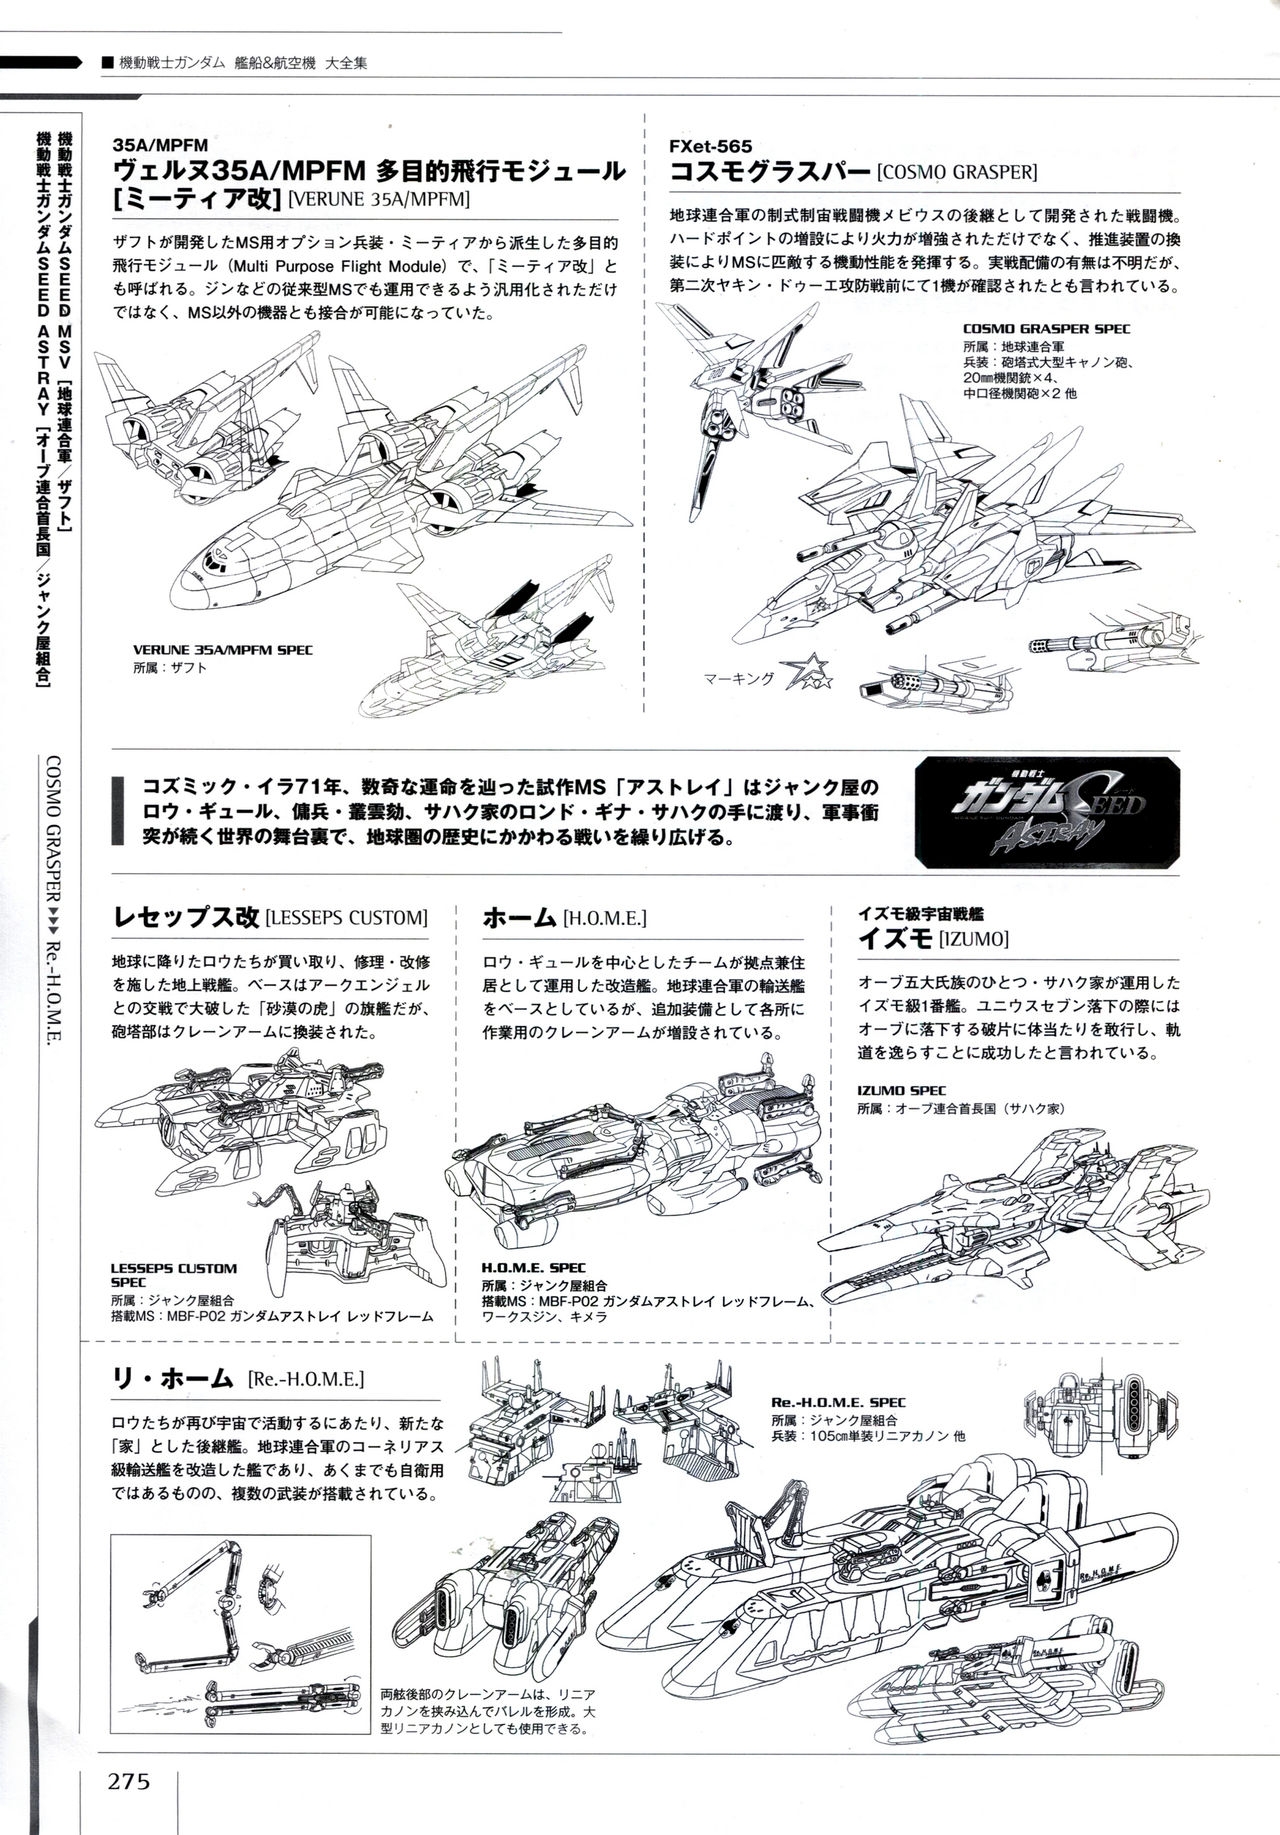 Mobile Suit Gundam - Ship & Aerospace Plane Encyclopedia - Revised Edition 280